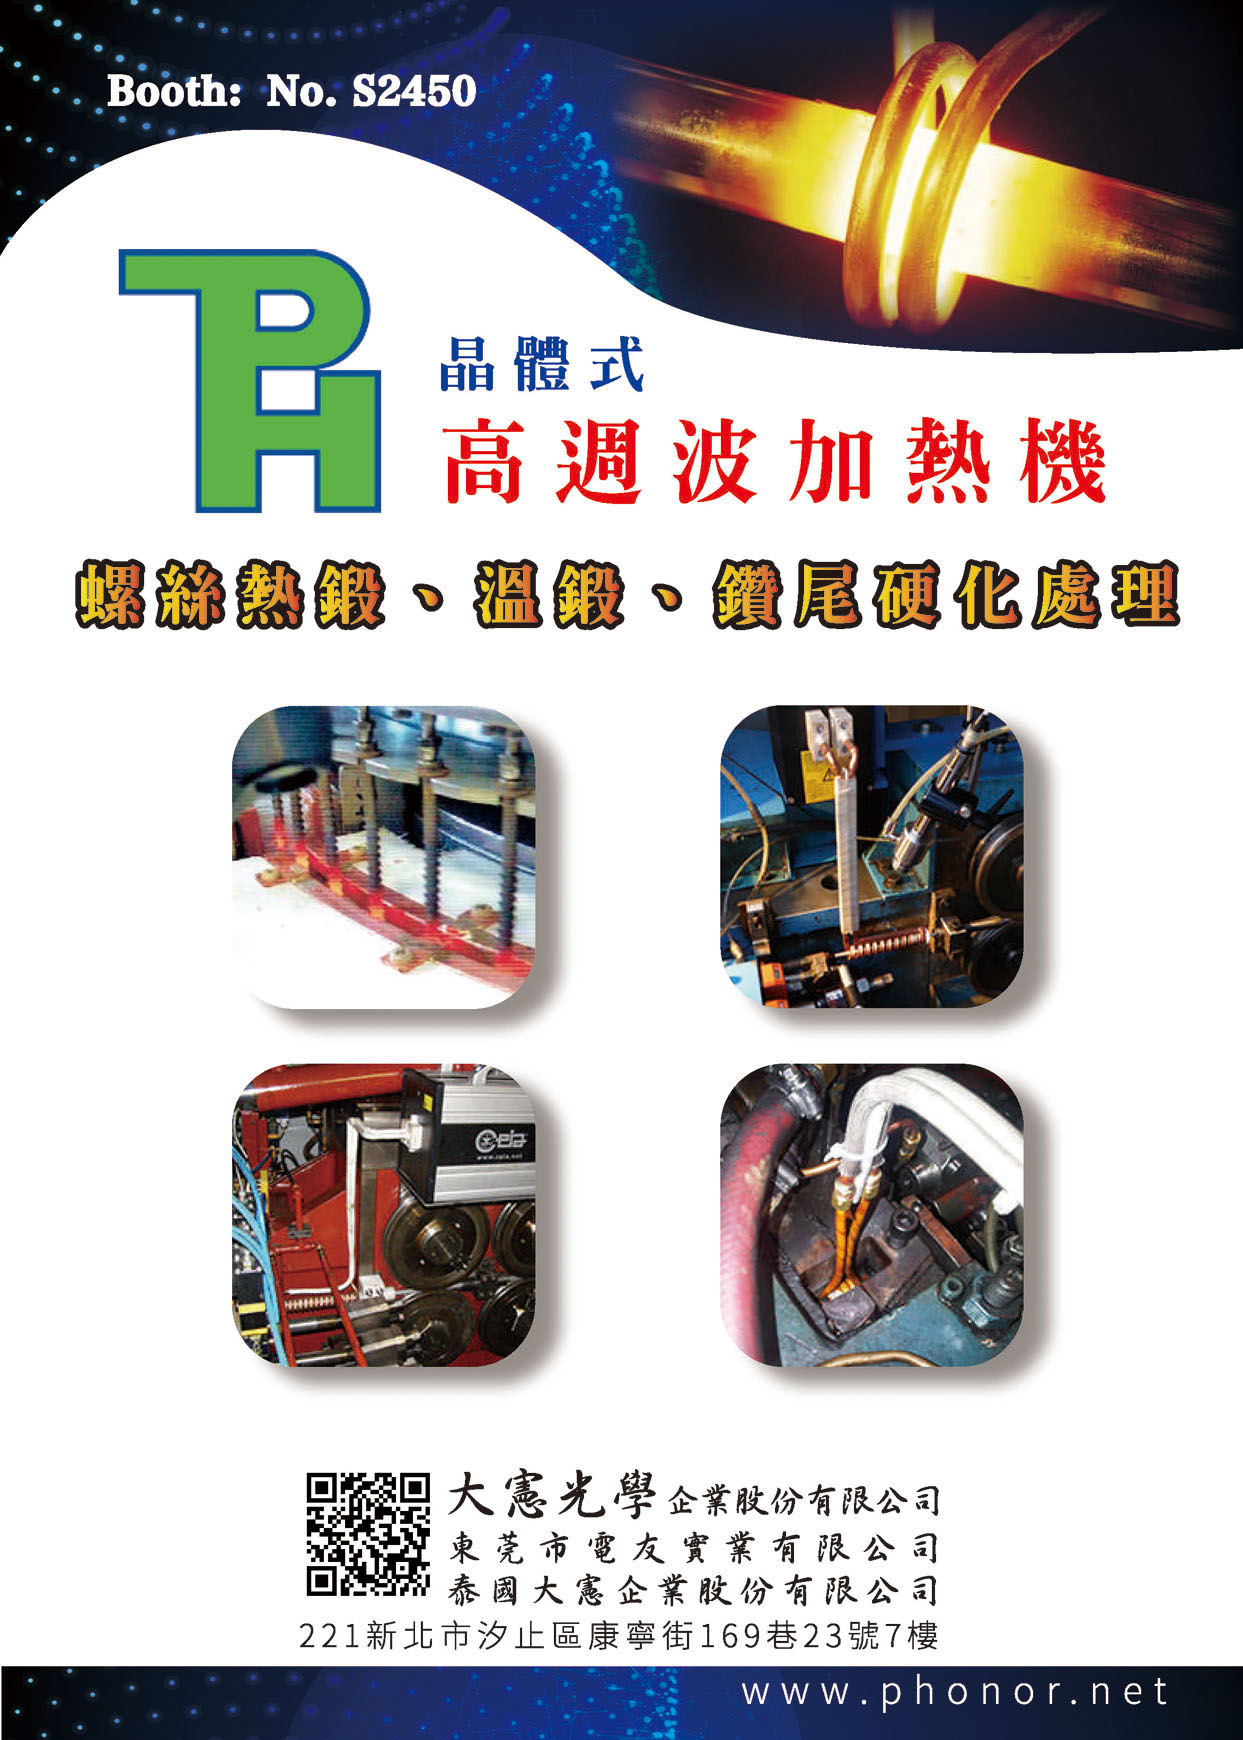 Taiwan International Fastener Show PRESIDENT HONOR INDUSTRIES CO., LTD.